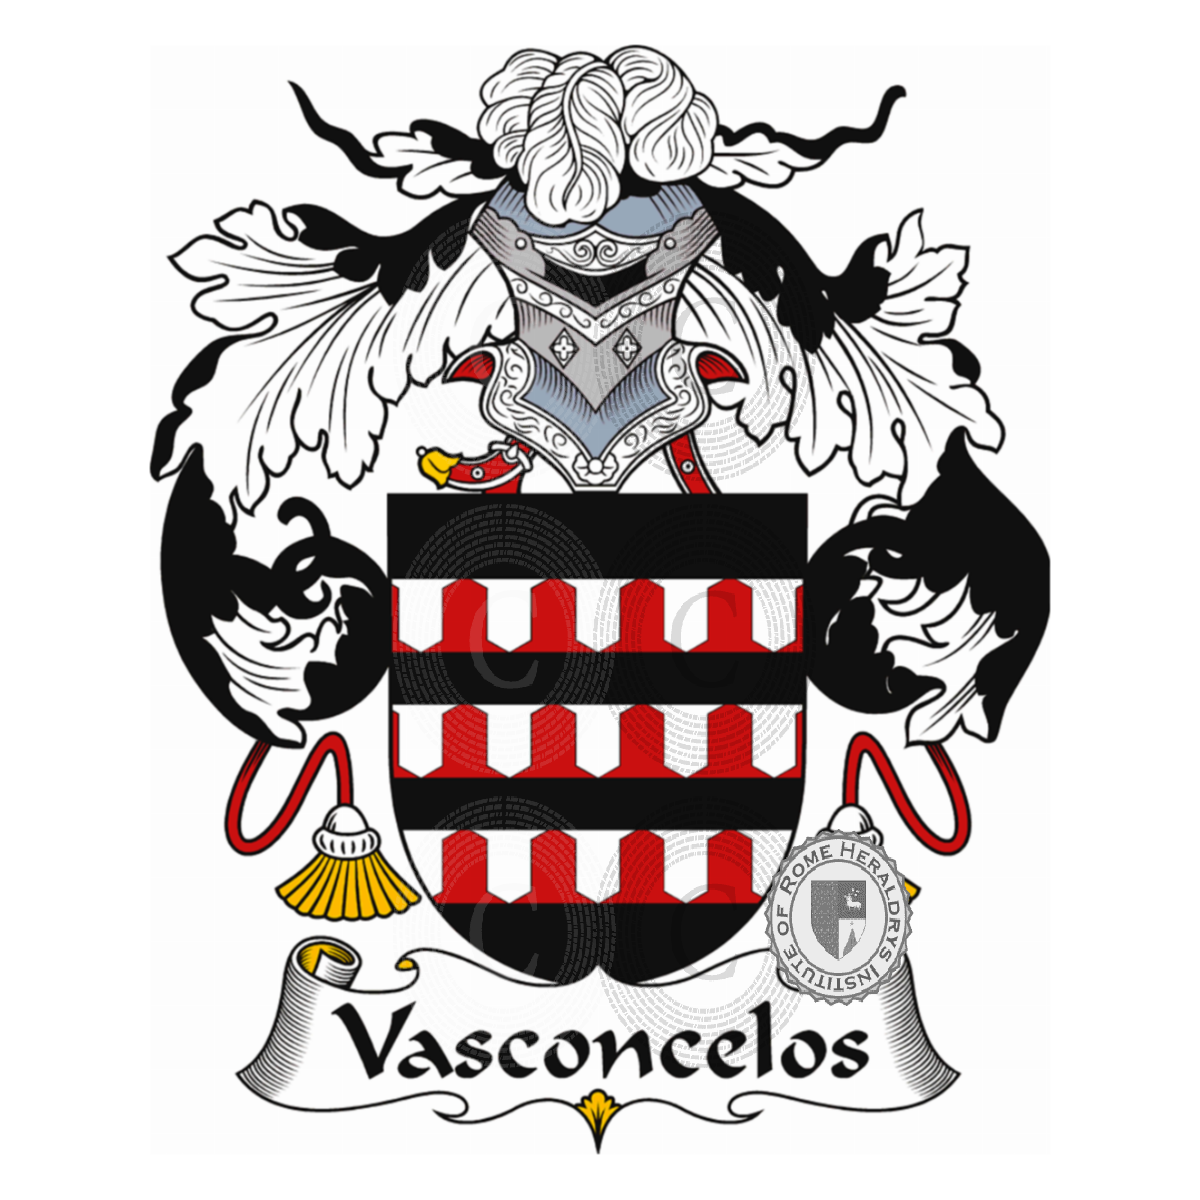 Stemma della famigliaVasconcelos, Vasconcellos